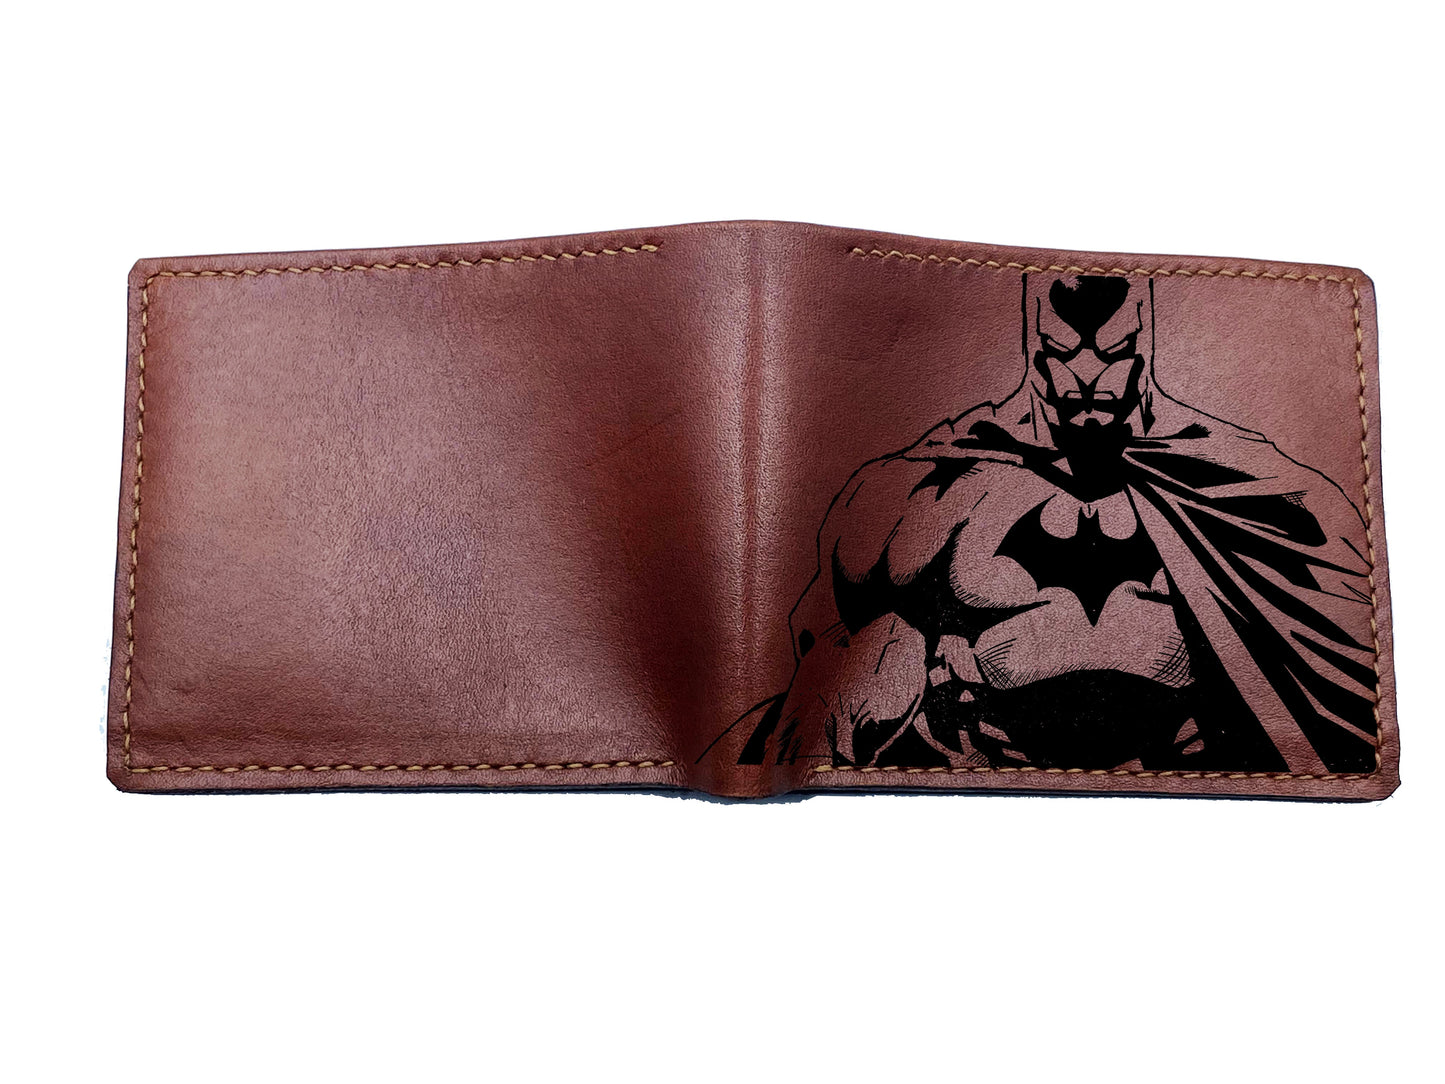 Mayan Corner - Batman leather wallet, superheroes genuine leather art, the dark knight pattern present, birthday gift ideas for boyfriend, father, husband